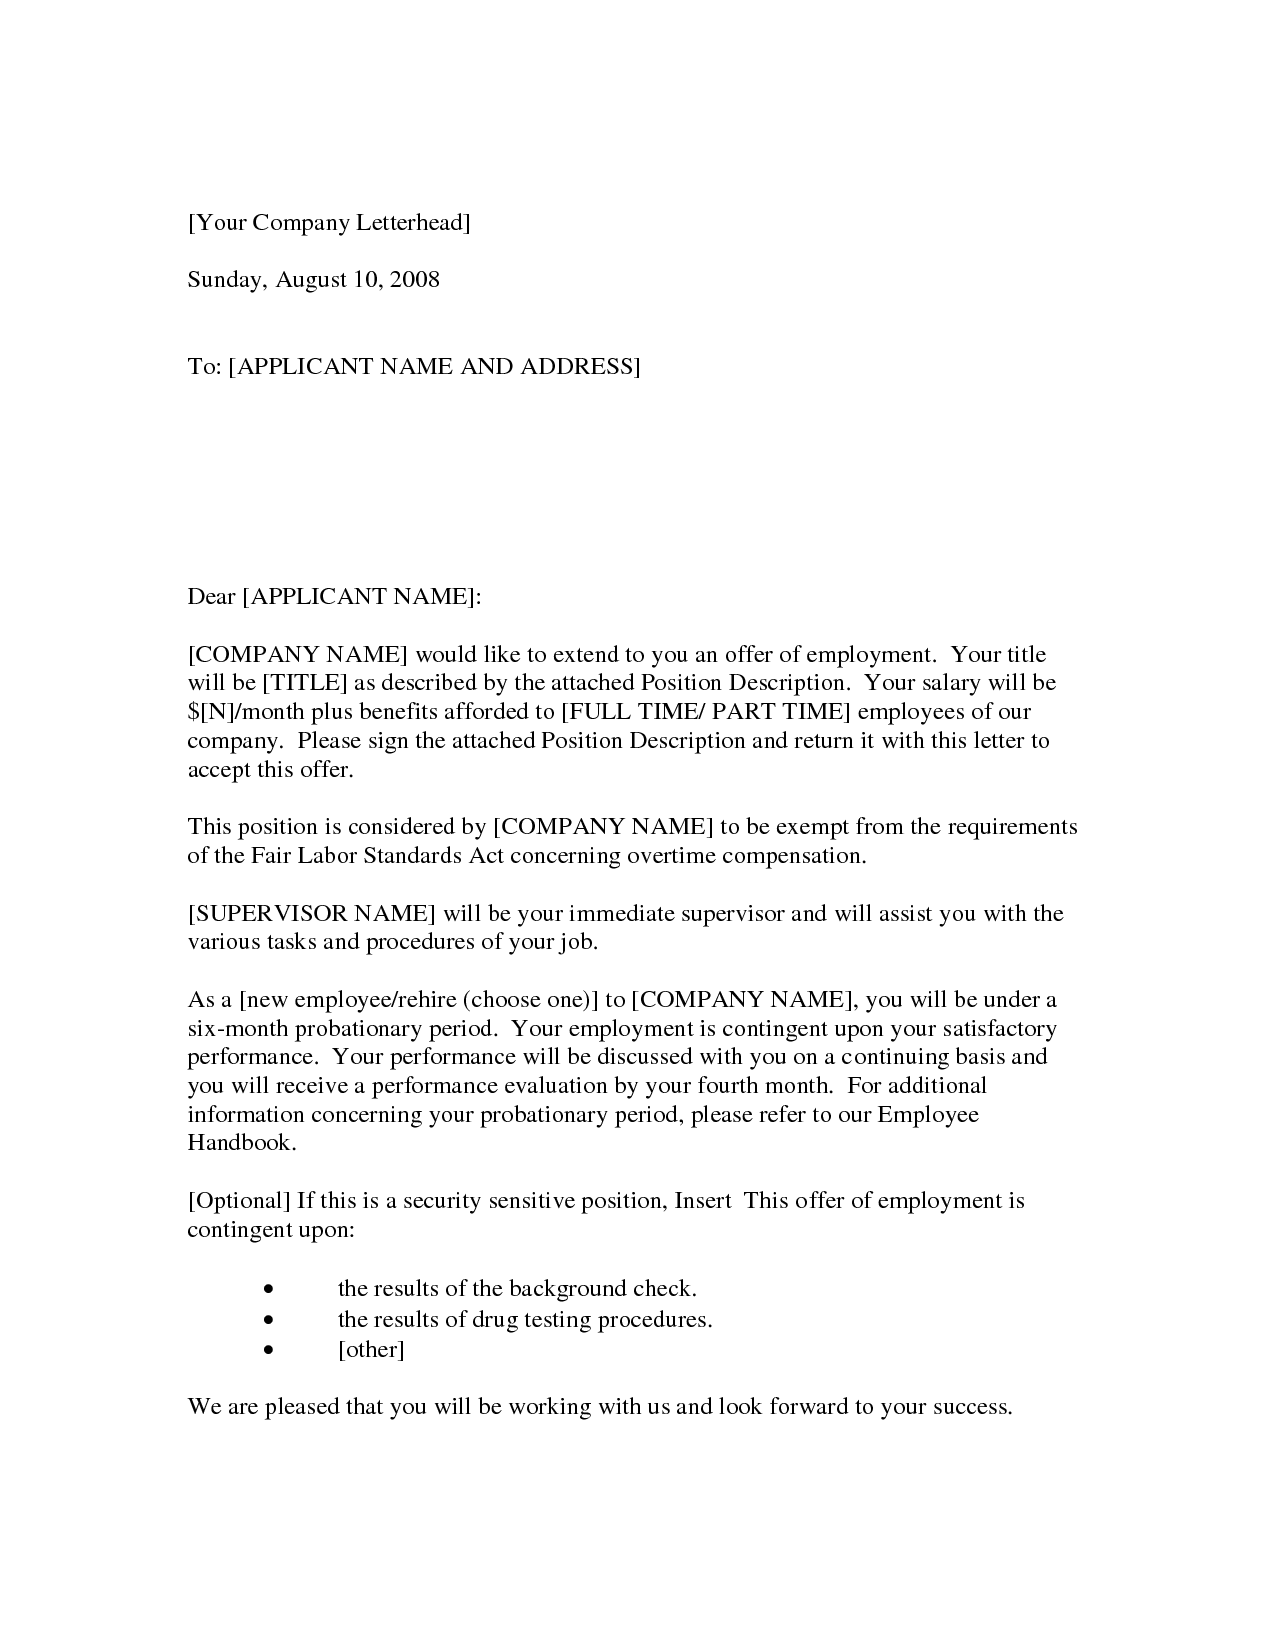 employment offer letter thebridgesummit.co